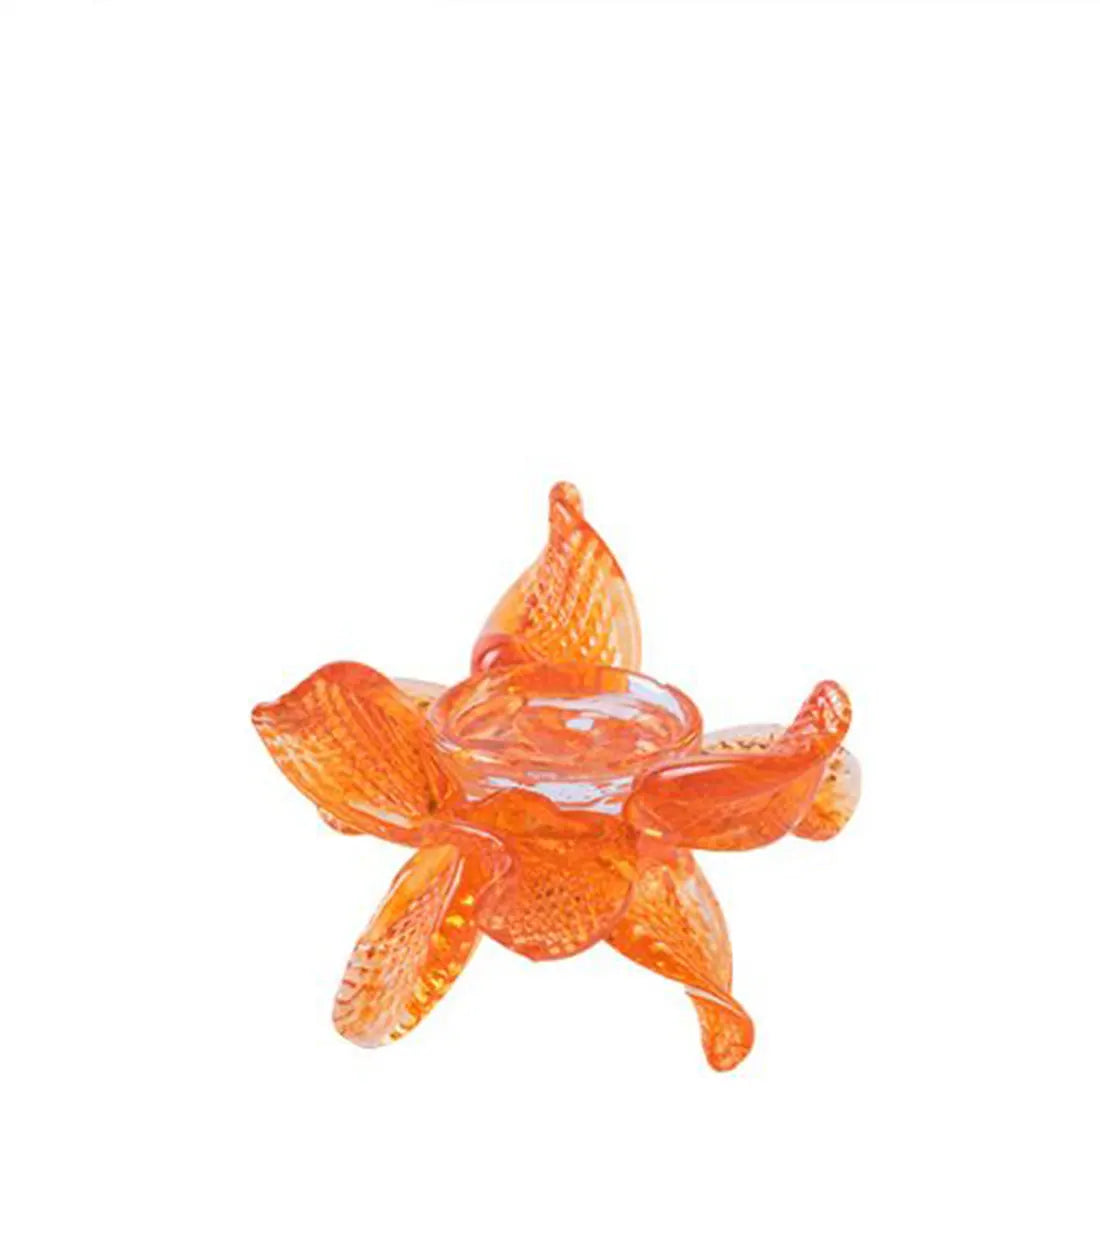 JIRI PACINEK - The star from the sea - Sleek Design with a Stunning Orange Hue